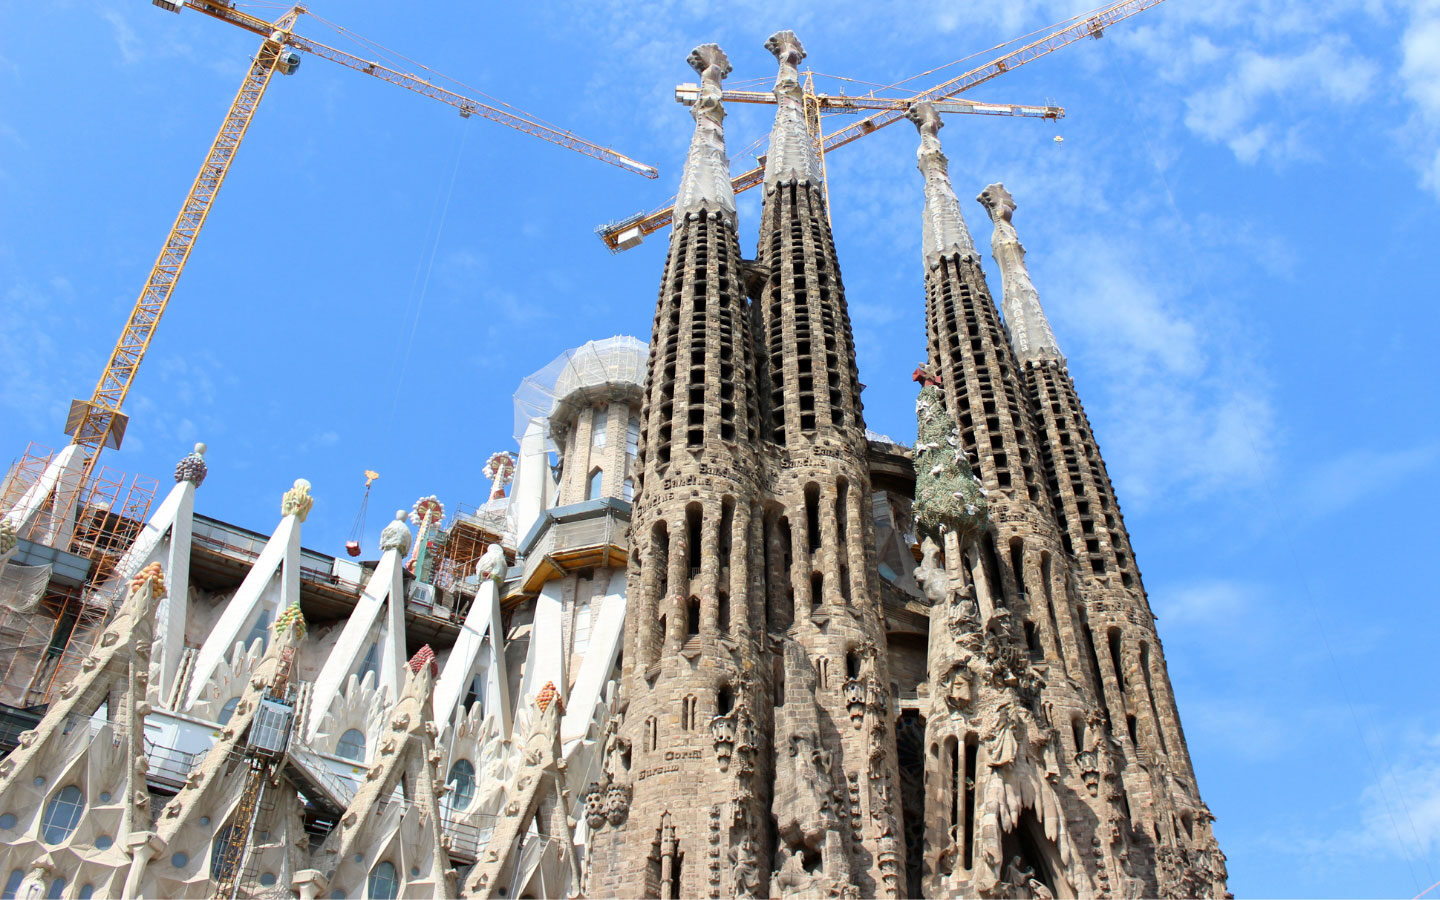 The Sagrada Família under construction in Barcelona